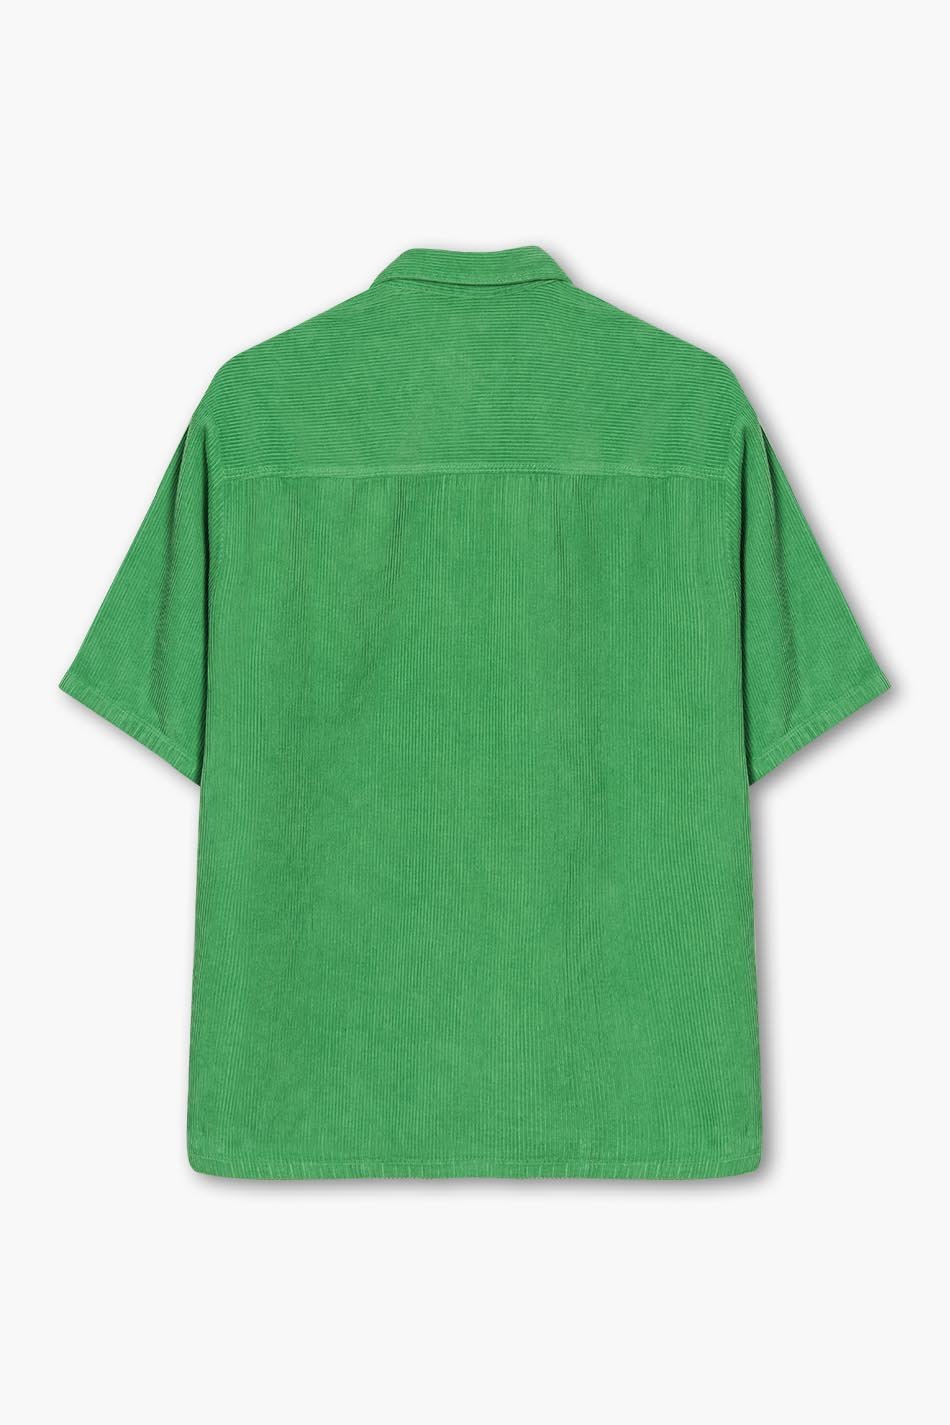 Camisa Corduroy Flower Green